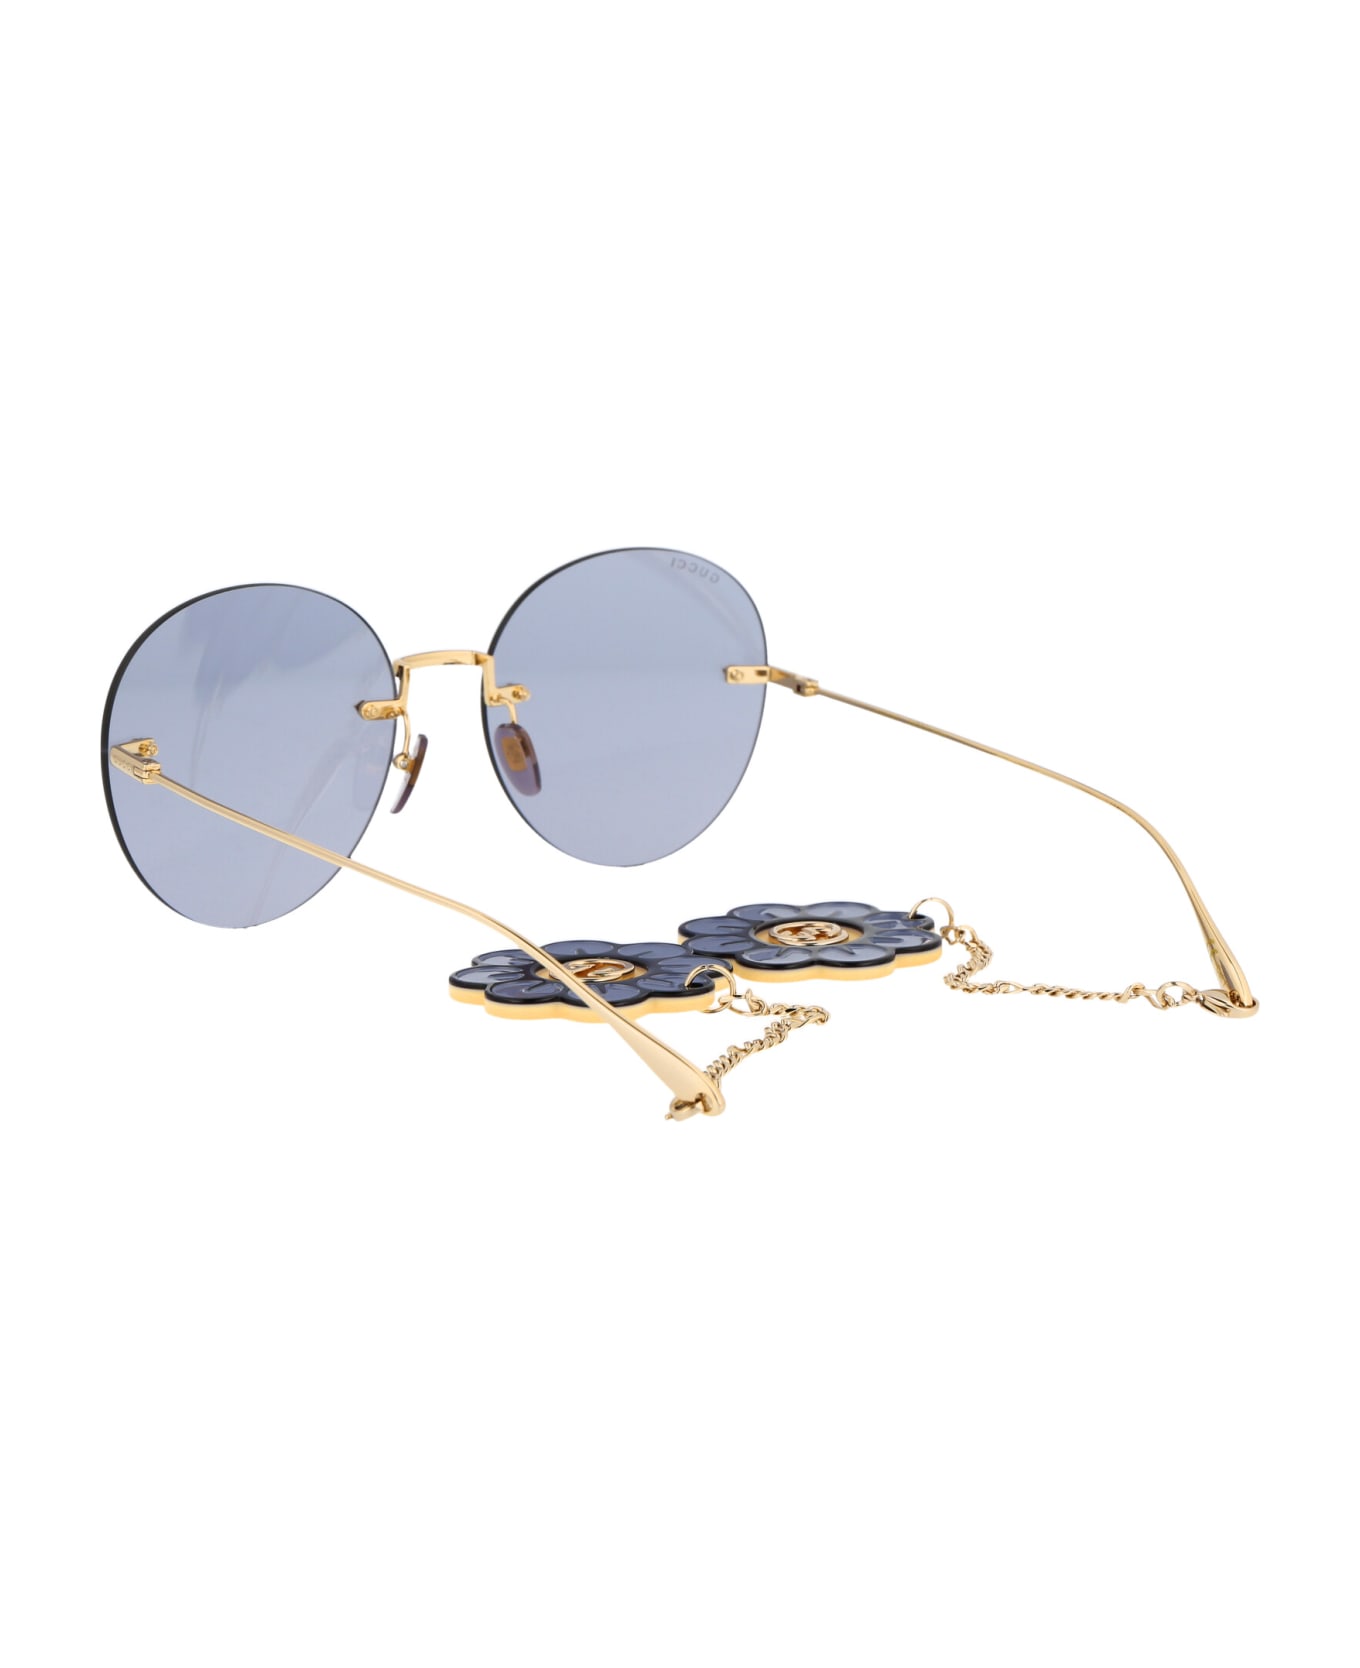 Gucci Eyewear Gg1149s Sunglasses - 006 GOLD GOLD VIOLET サングラス